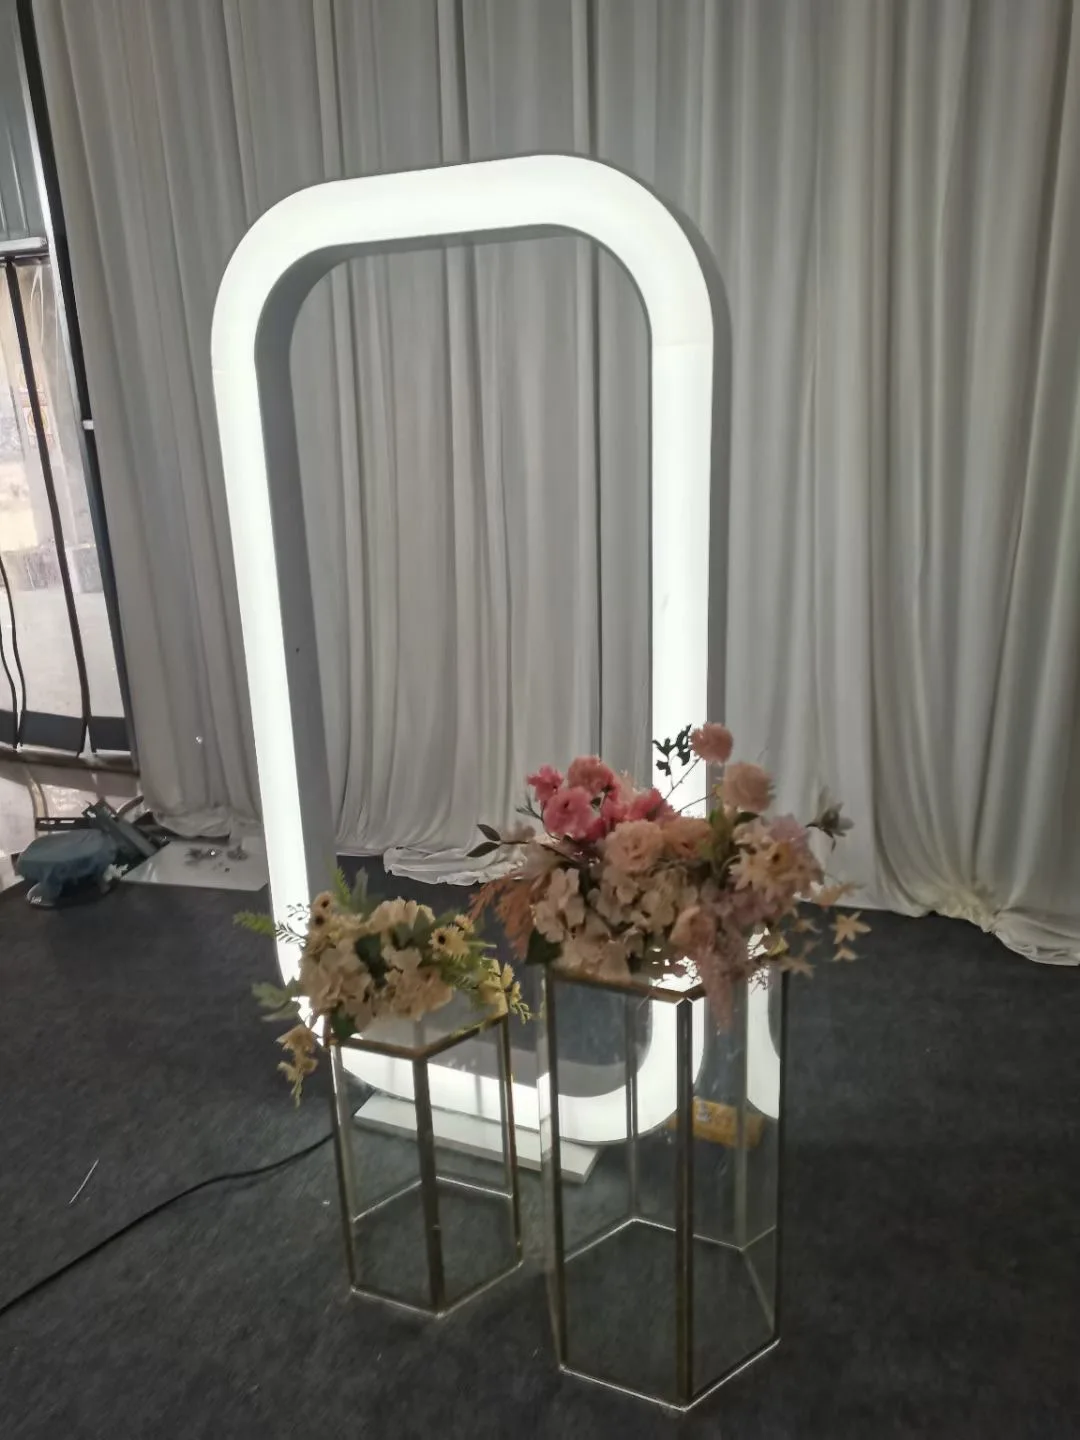 ANNIELU acrylic led light wedding backdrop for birthday party wedding decorations